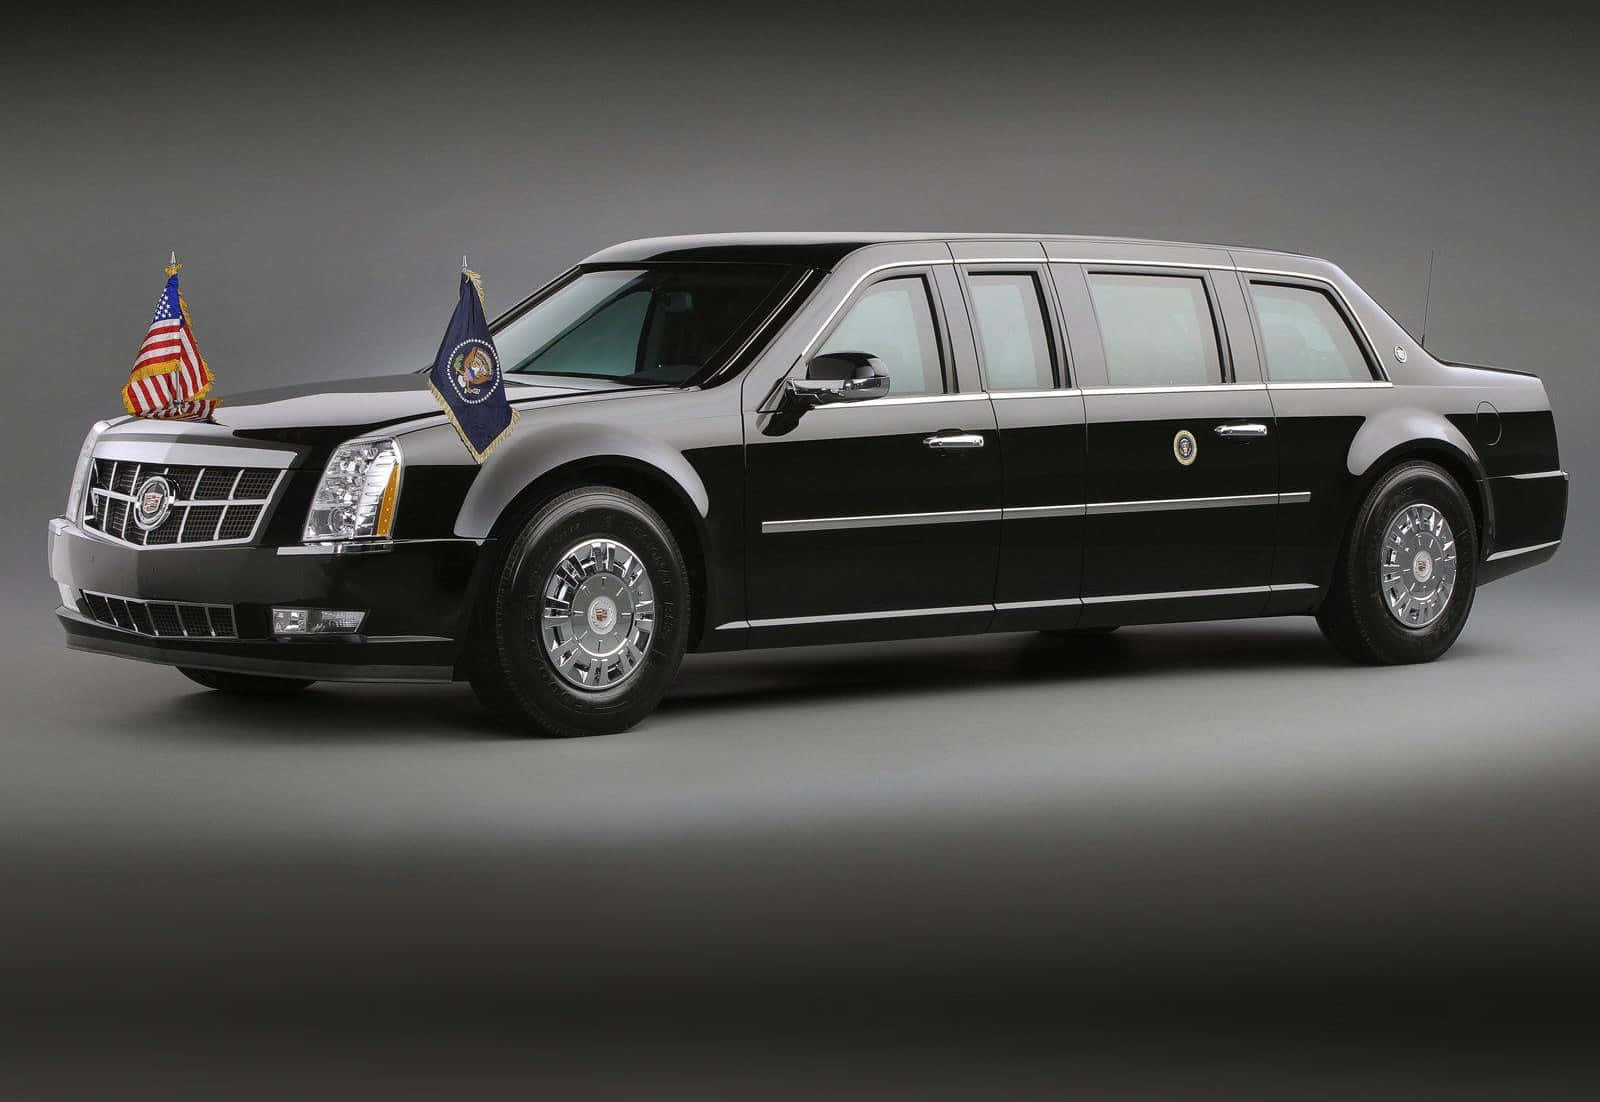 "Cadillac - The Emblem of Luxury."